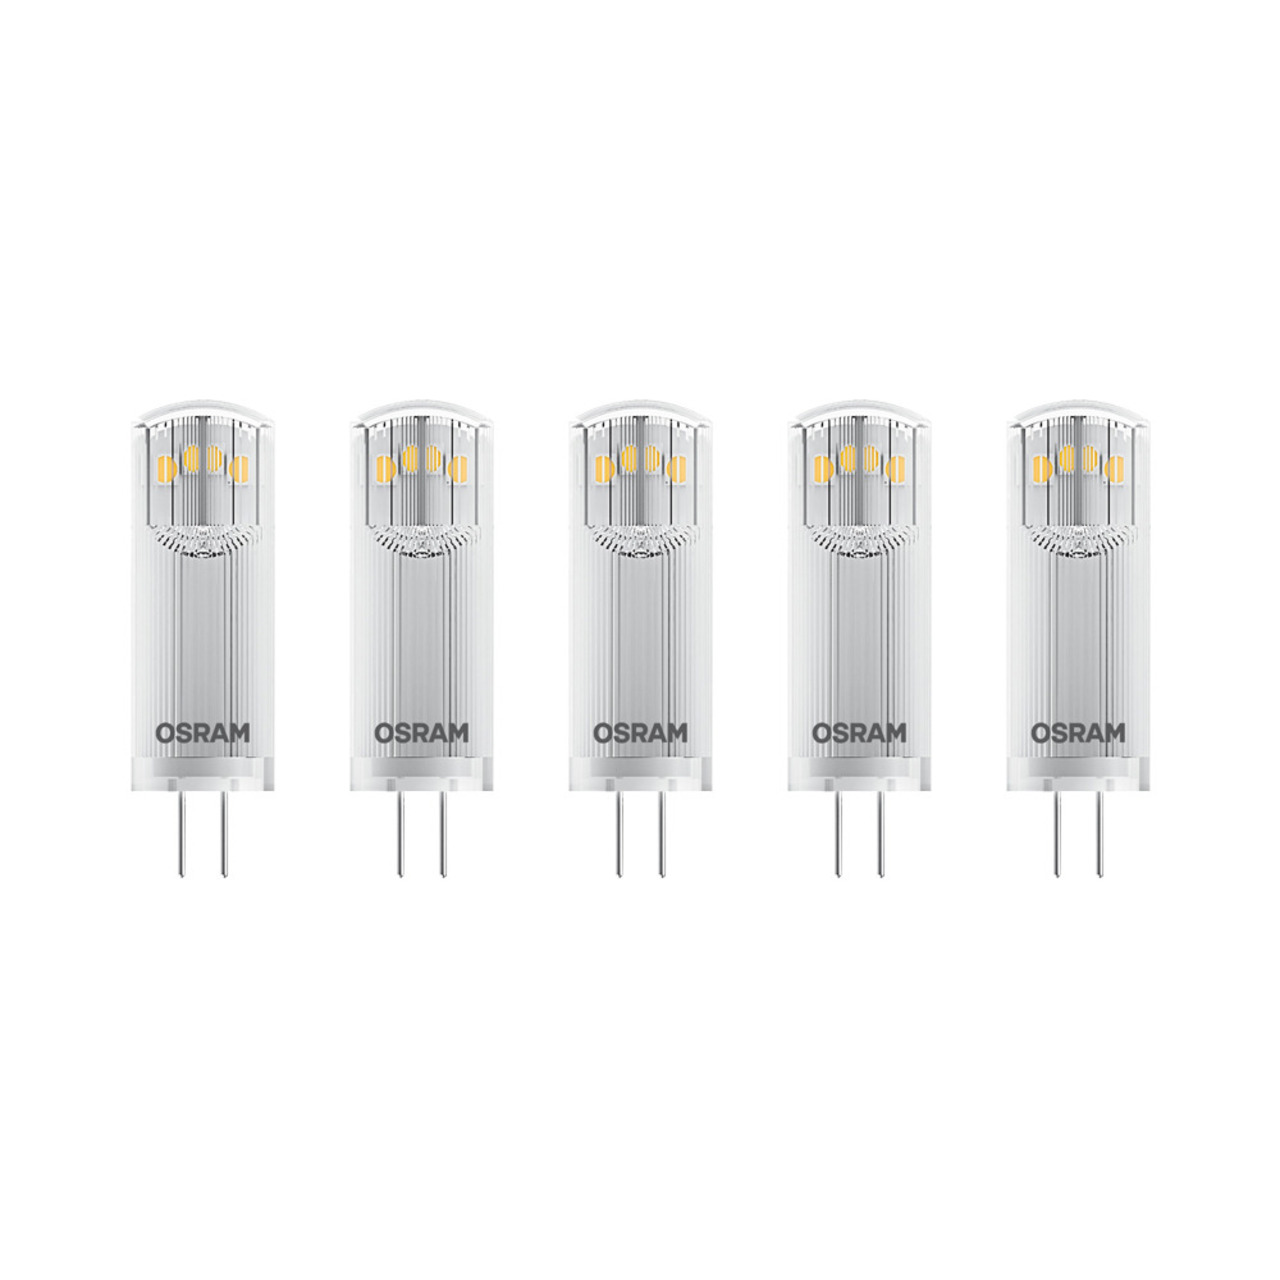 OSRAM 5er-Pack 1-8-W-G4-LED-Lampen- warmweiss- 12 V AC